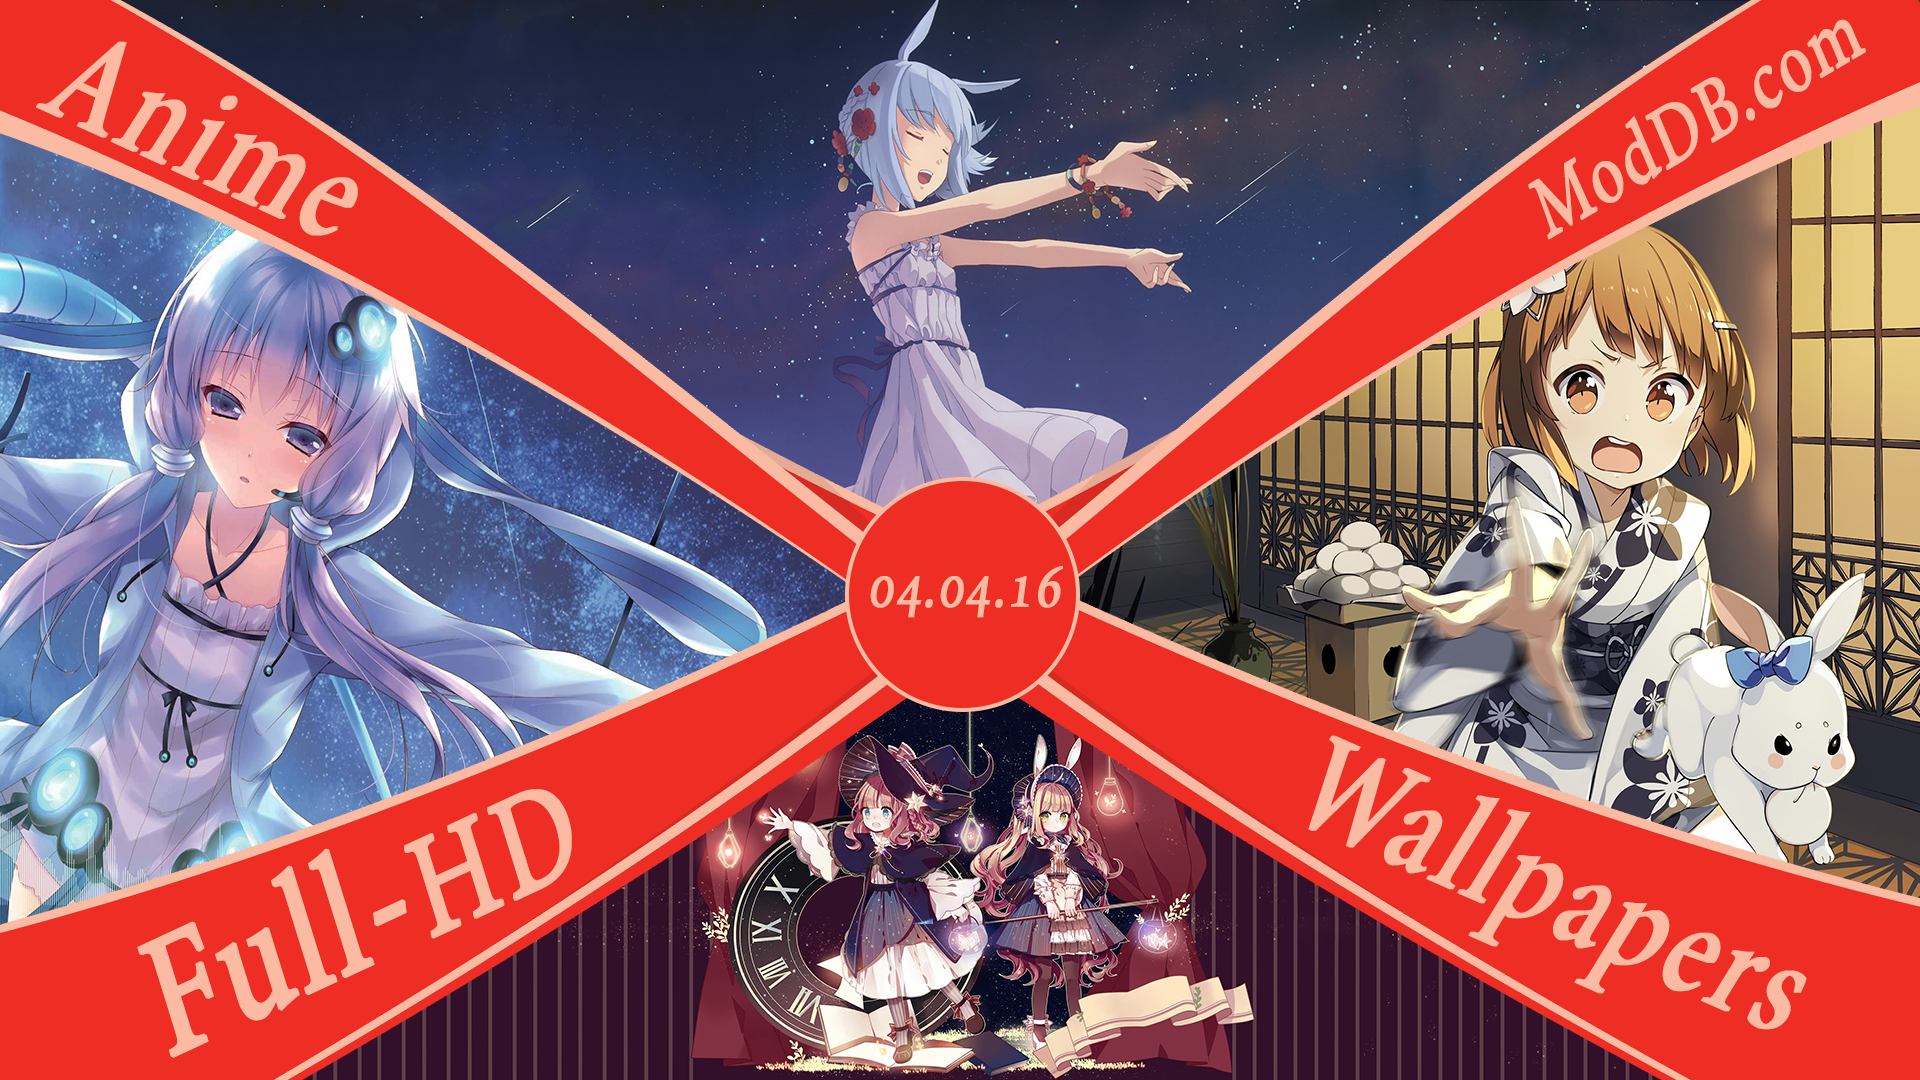 Old Anime Wallpaper's (Full-HD) - 16.06.14 file - ModDB